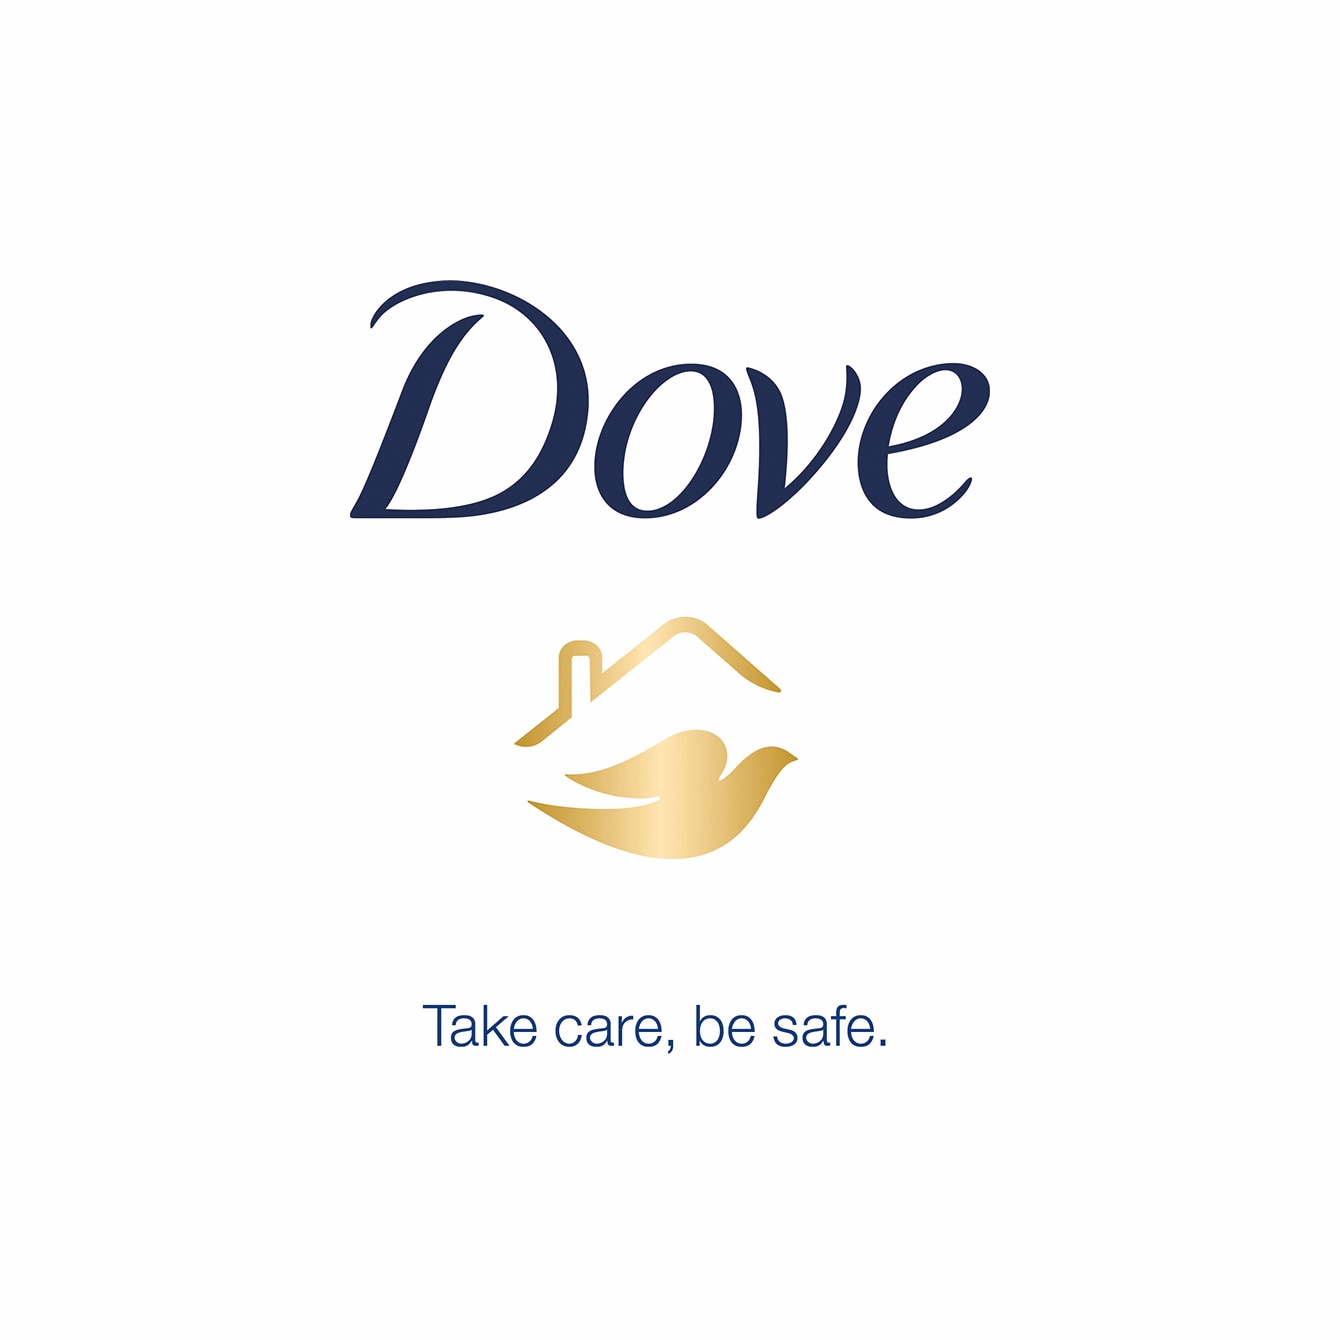 Dove Take care, stay safe